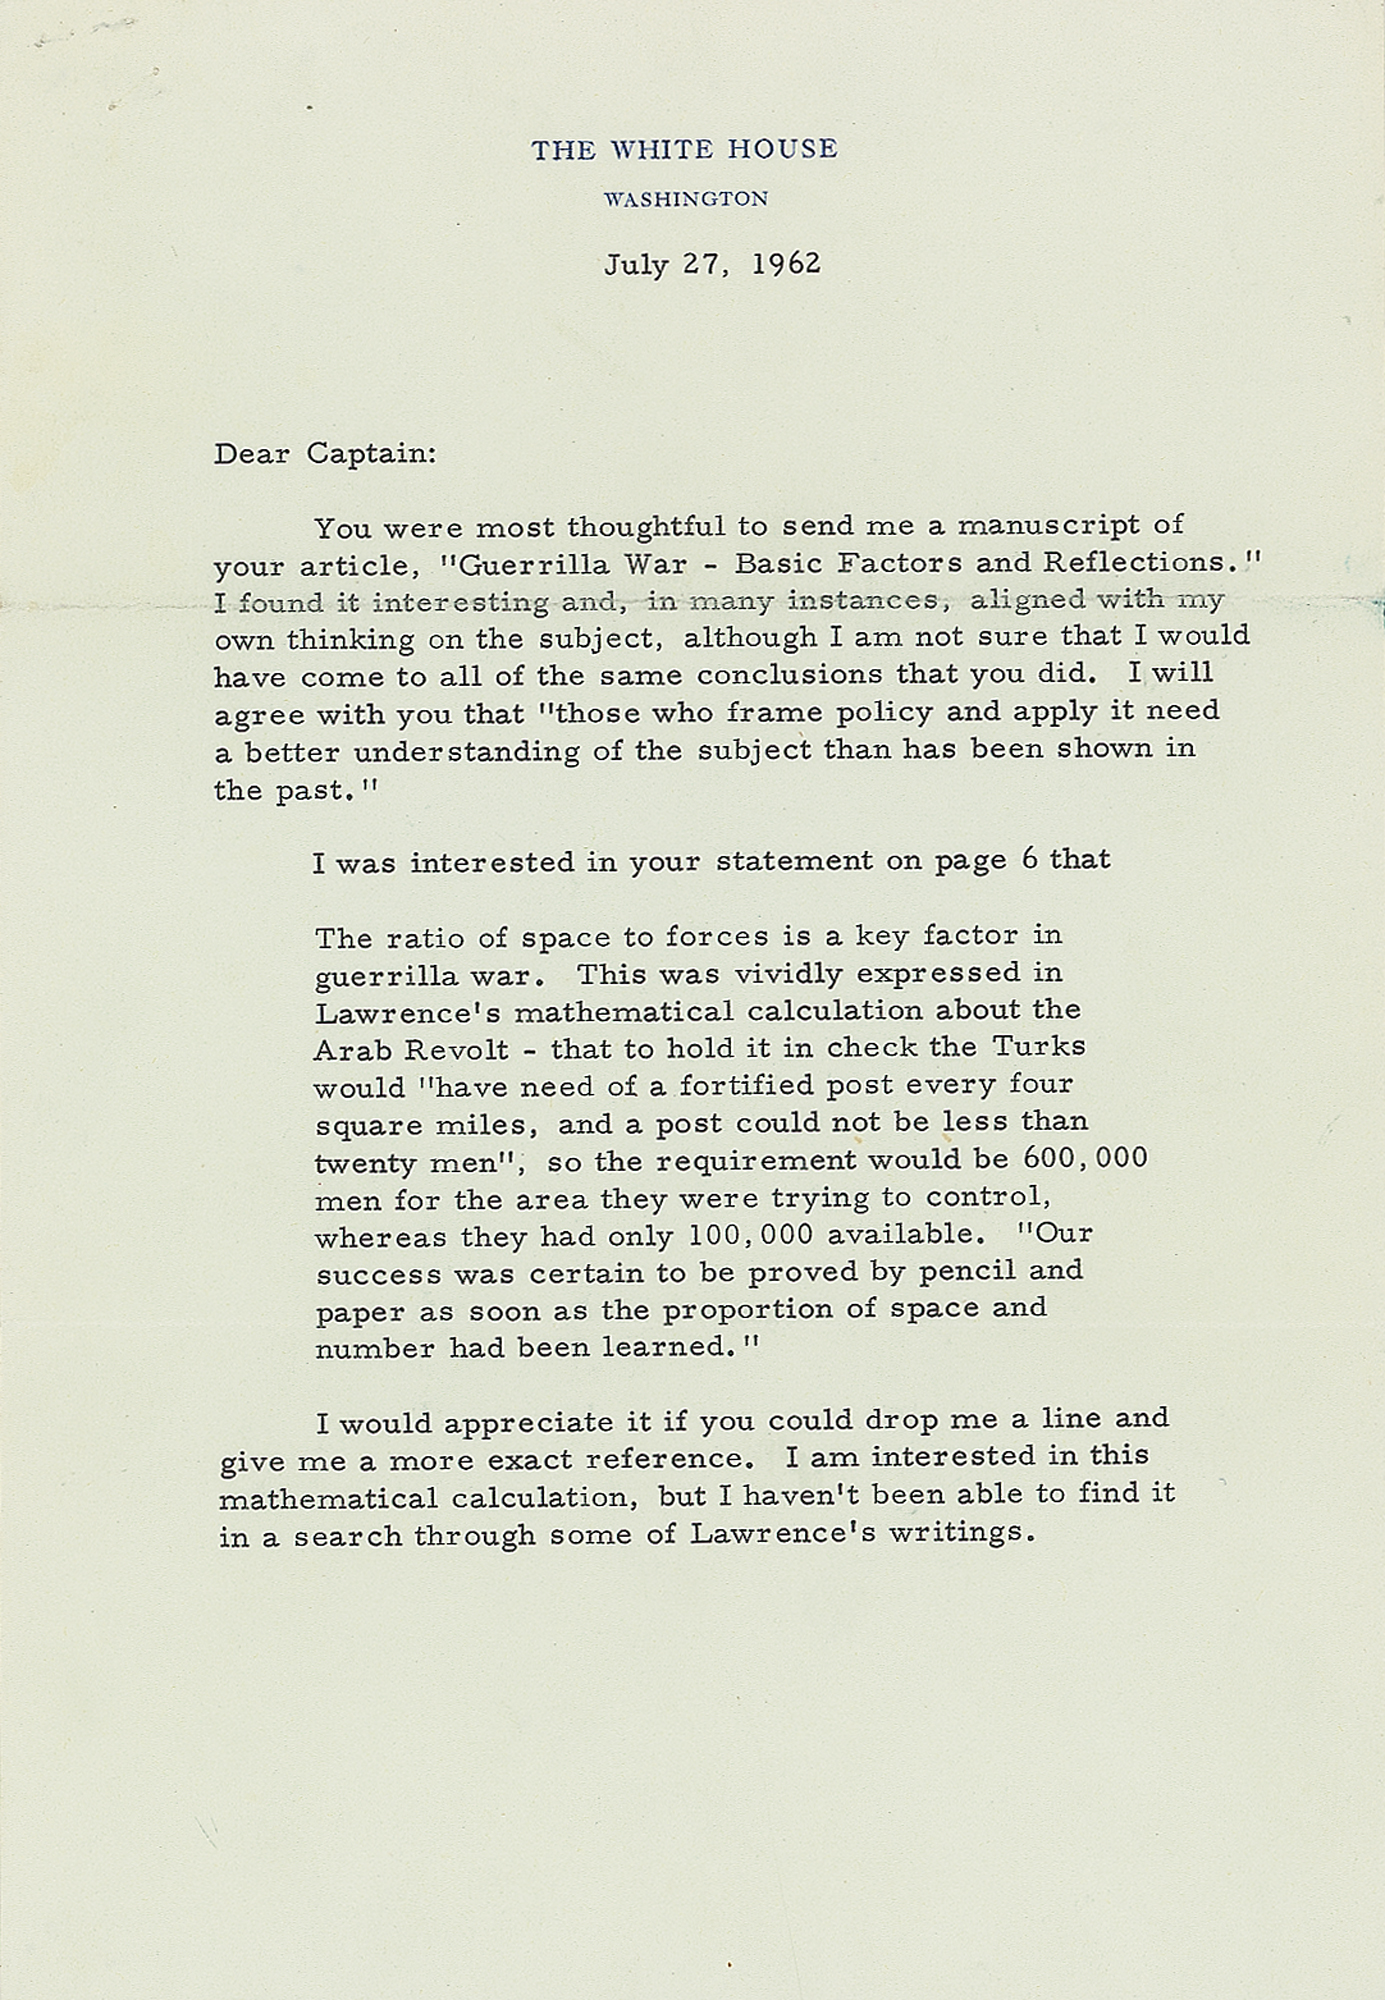 Lot #48 John F. Kennedy Typed Letter Signed as President